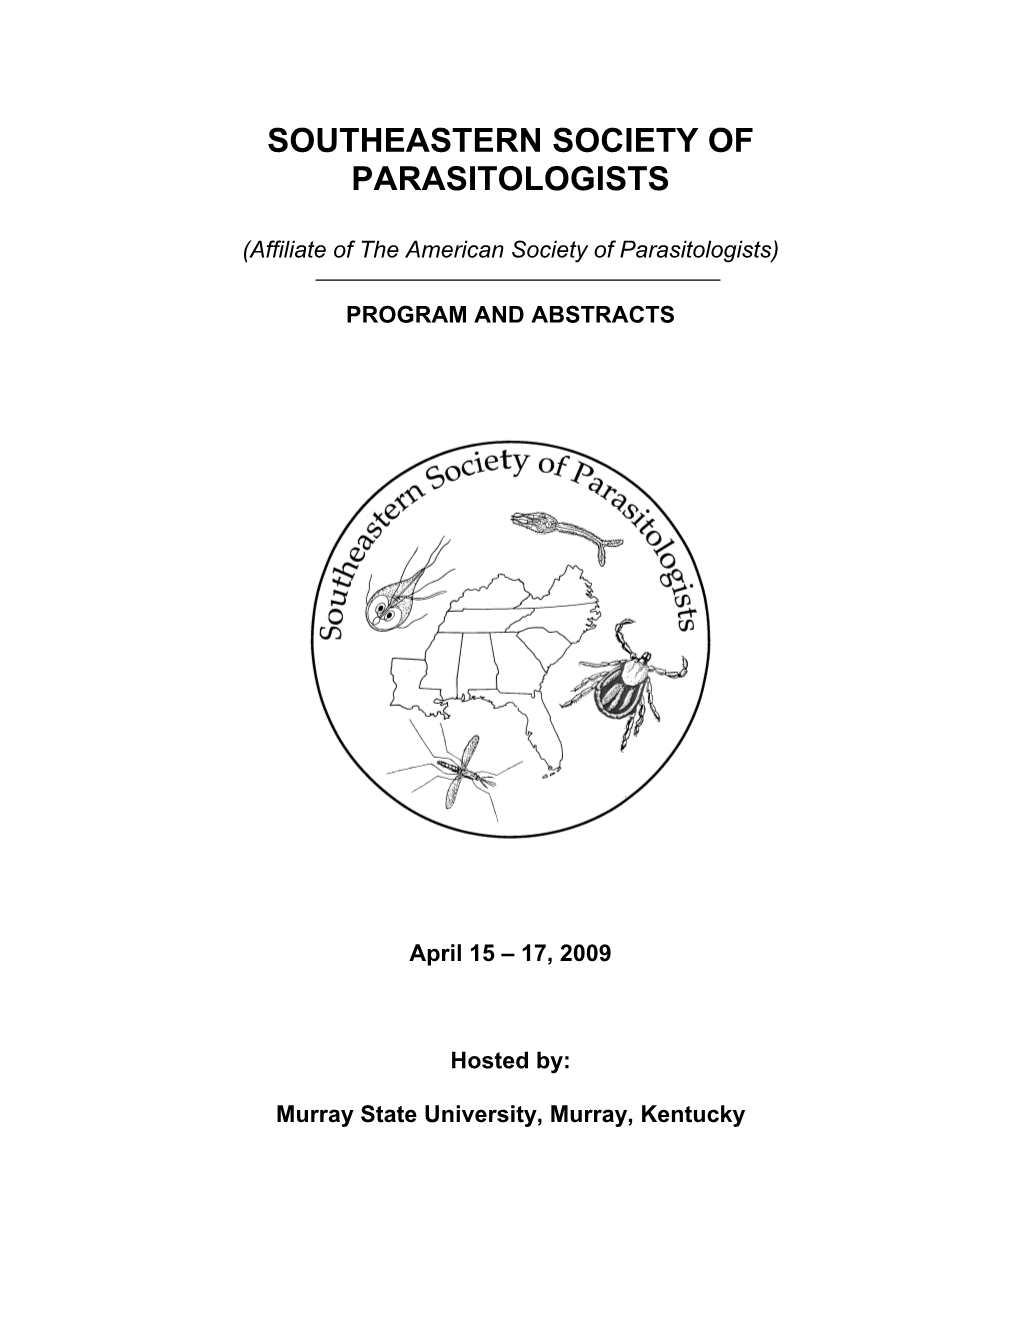 Southeastern Society of Parasitologists 2009 Program Summary